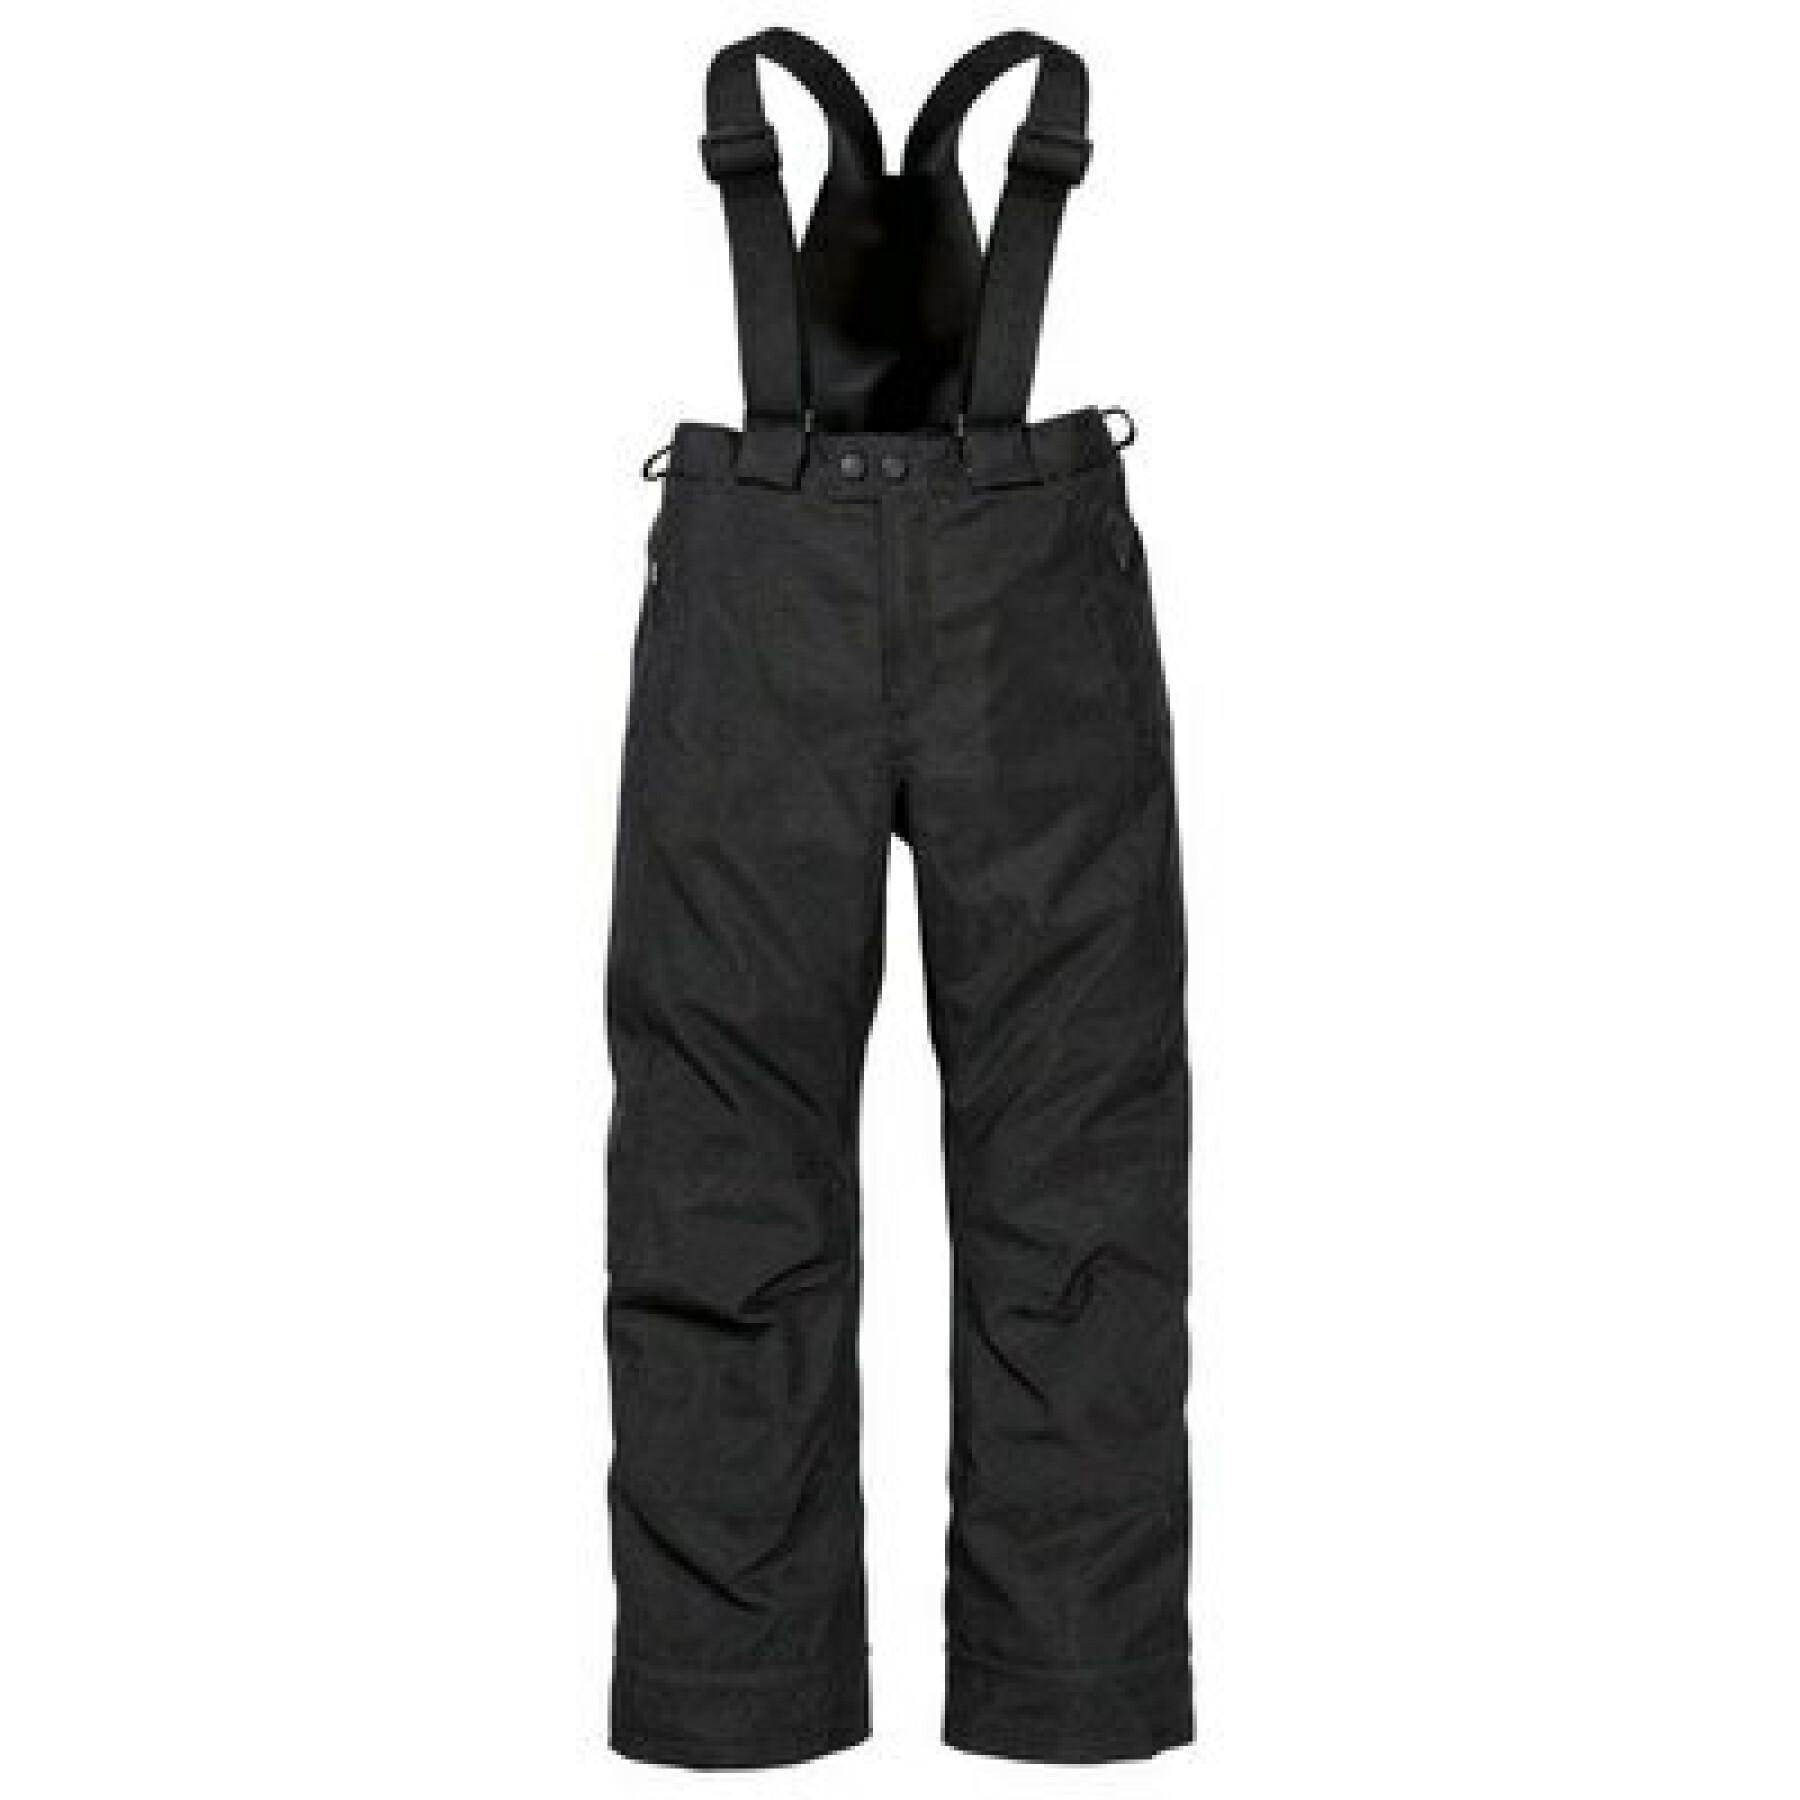 Pantalones de moto para niños Difi skywalker